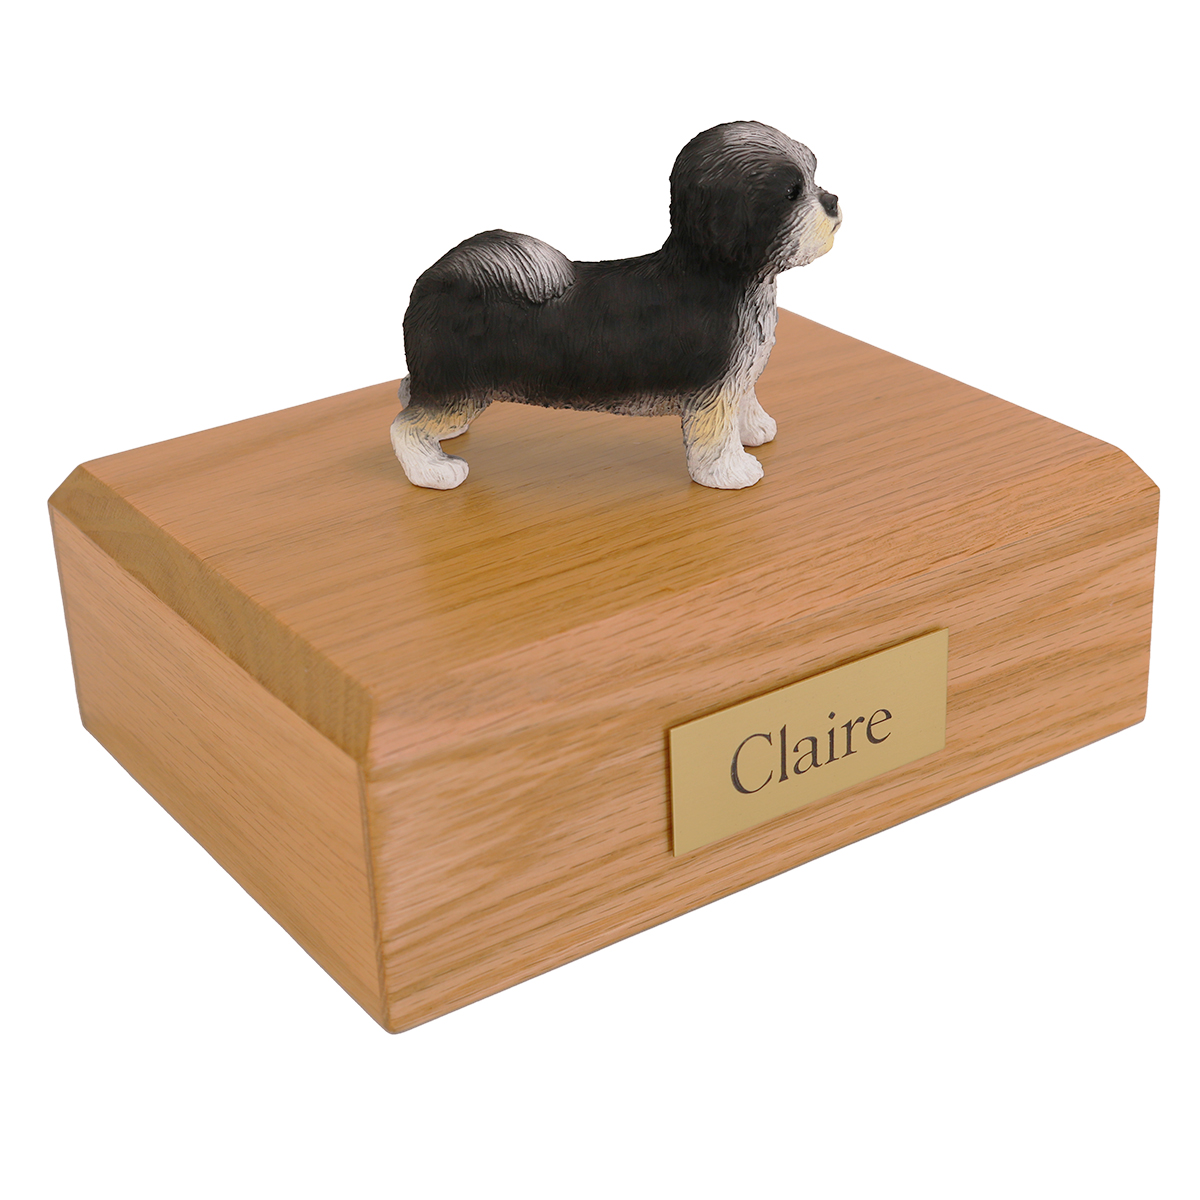 Dog, Shih Tzu, Black/White, Puppycut - Figurine Urn